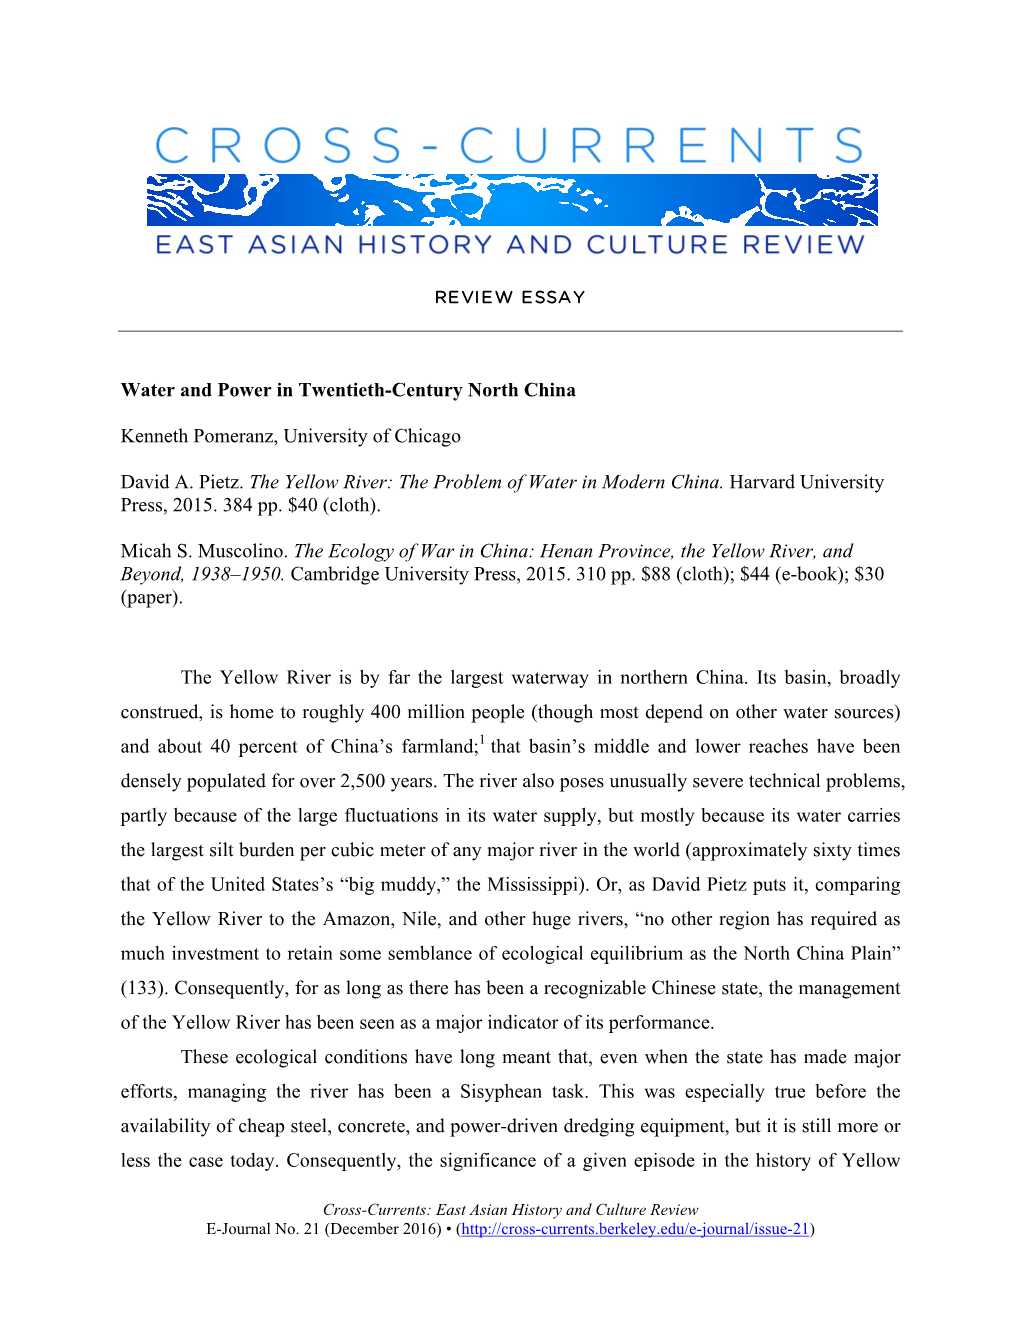 Water and Power in Twentieth-Century North China